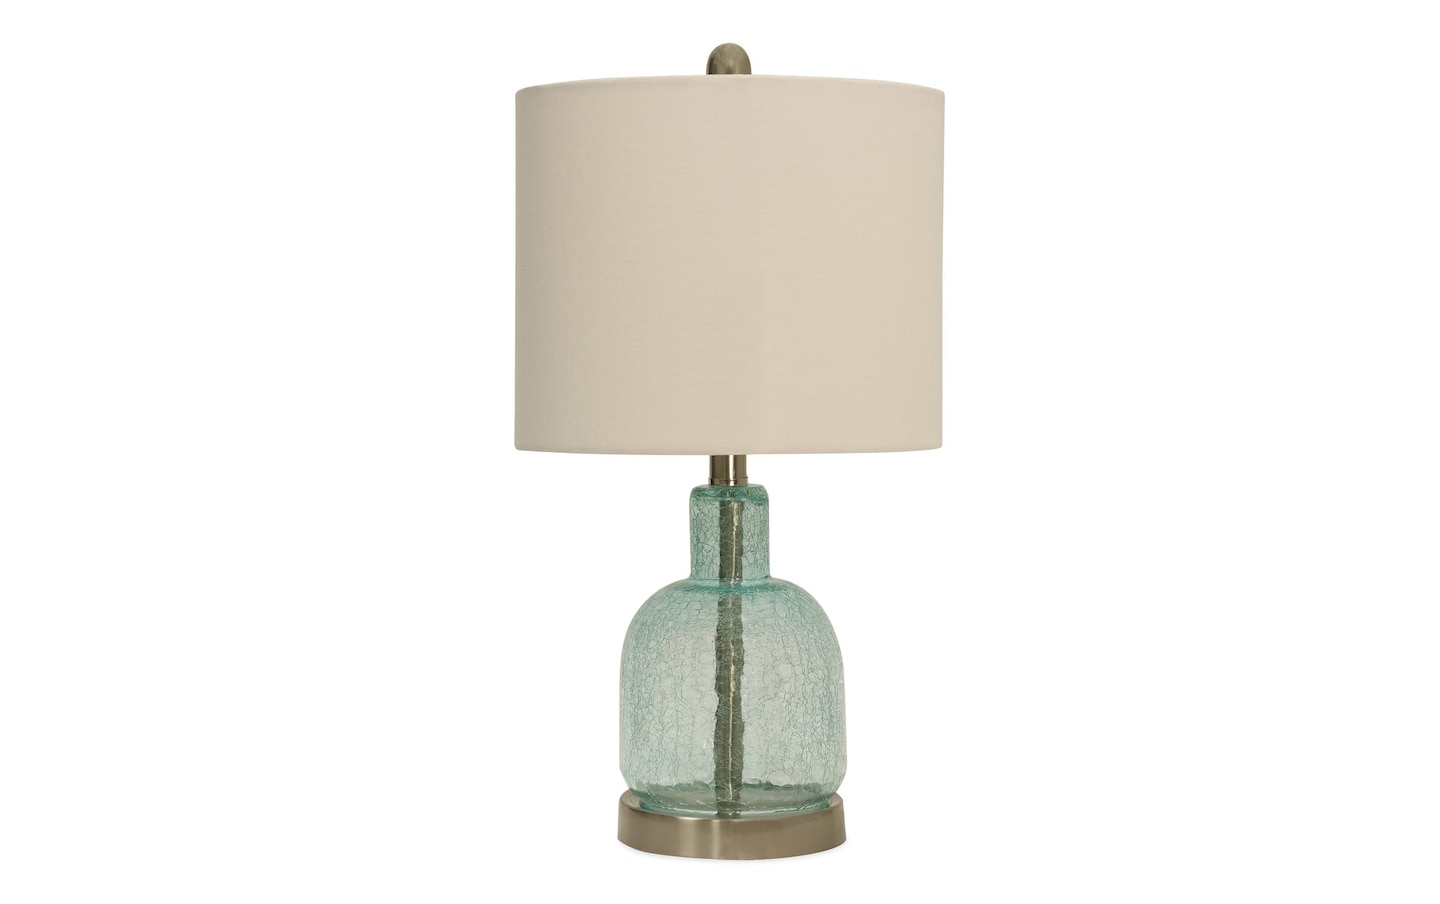 Sela Table Lamp | Bob's Discount Furniture & Mattress Store